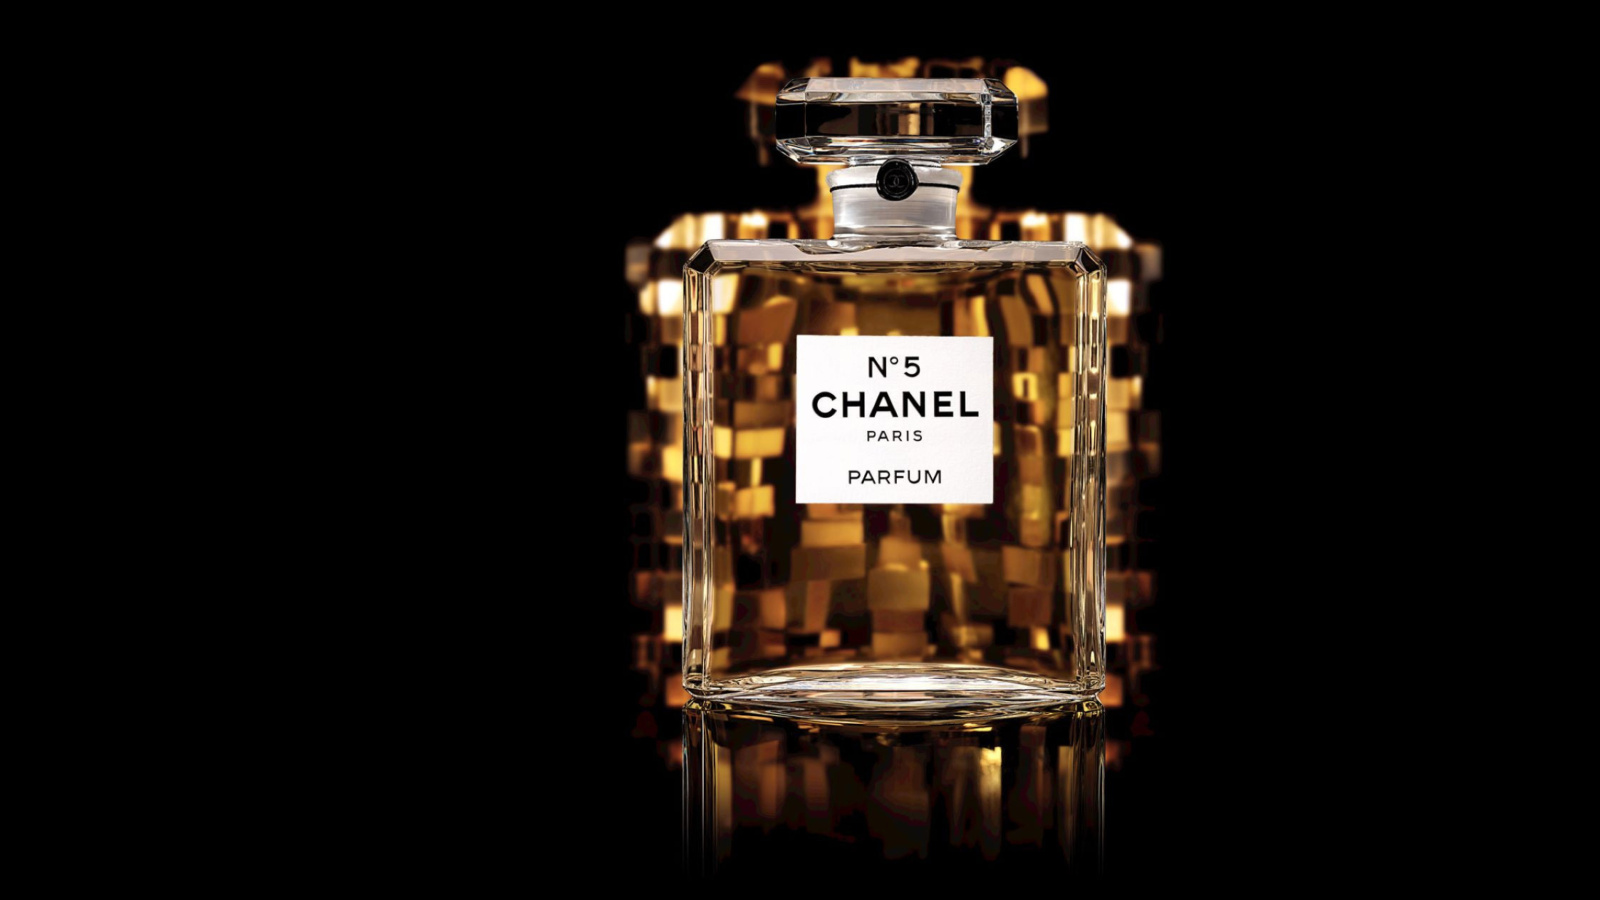 Das Chanel 5 Fragrance Perfume Wallpaper 1600x900